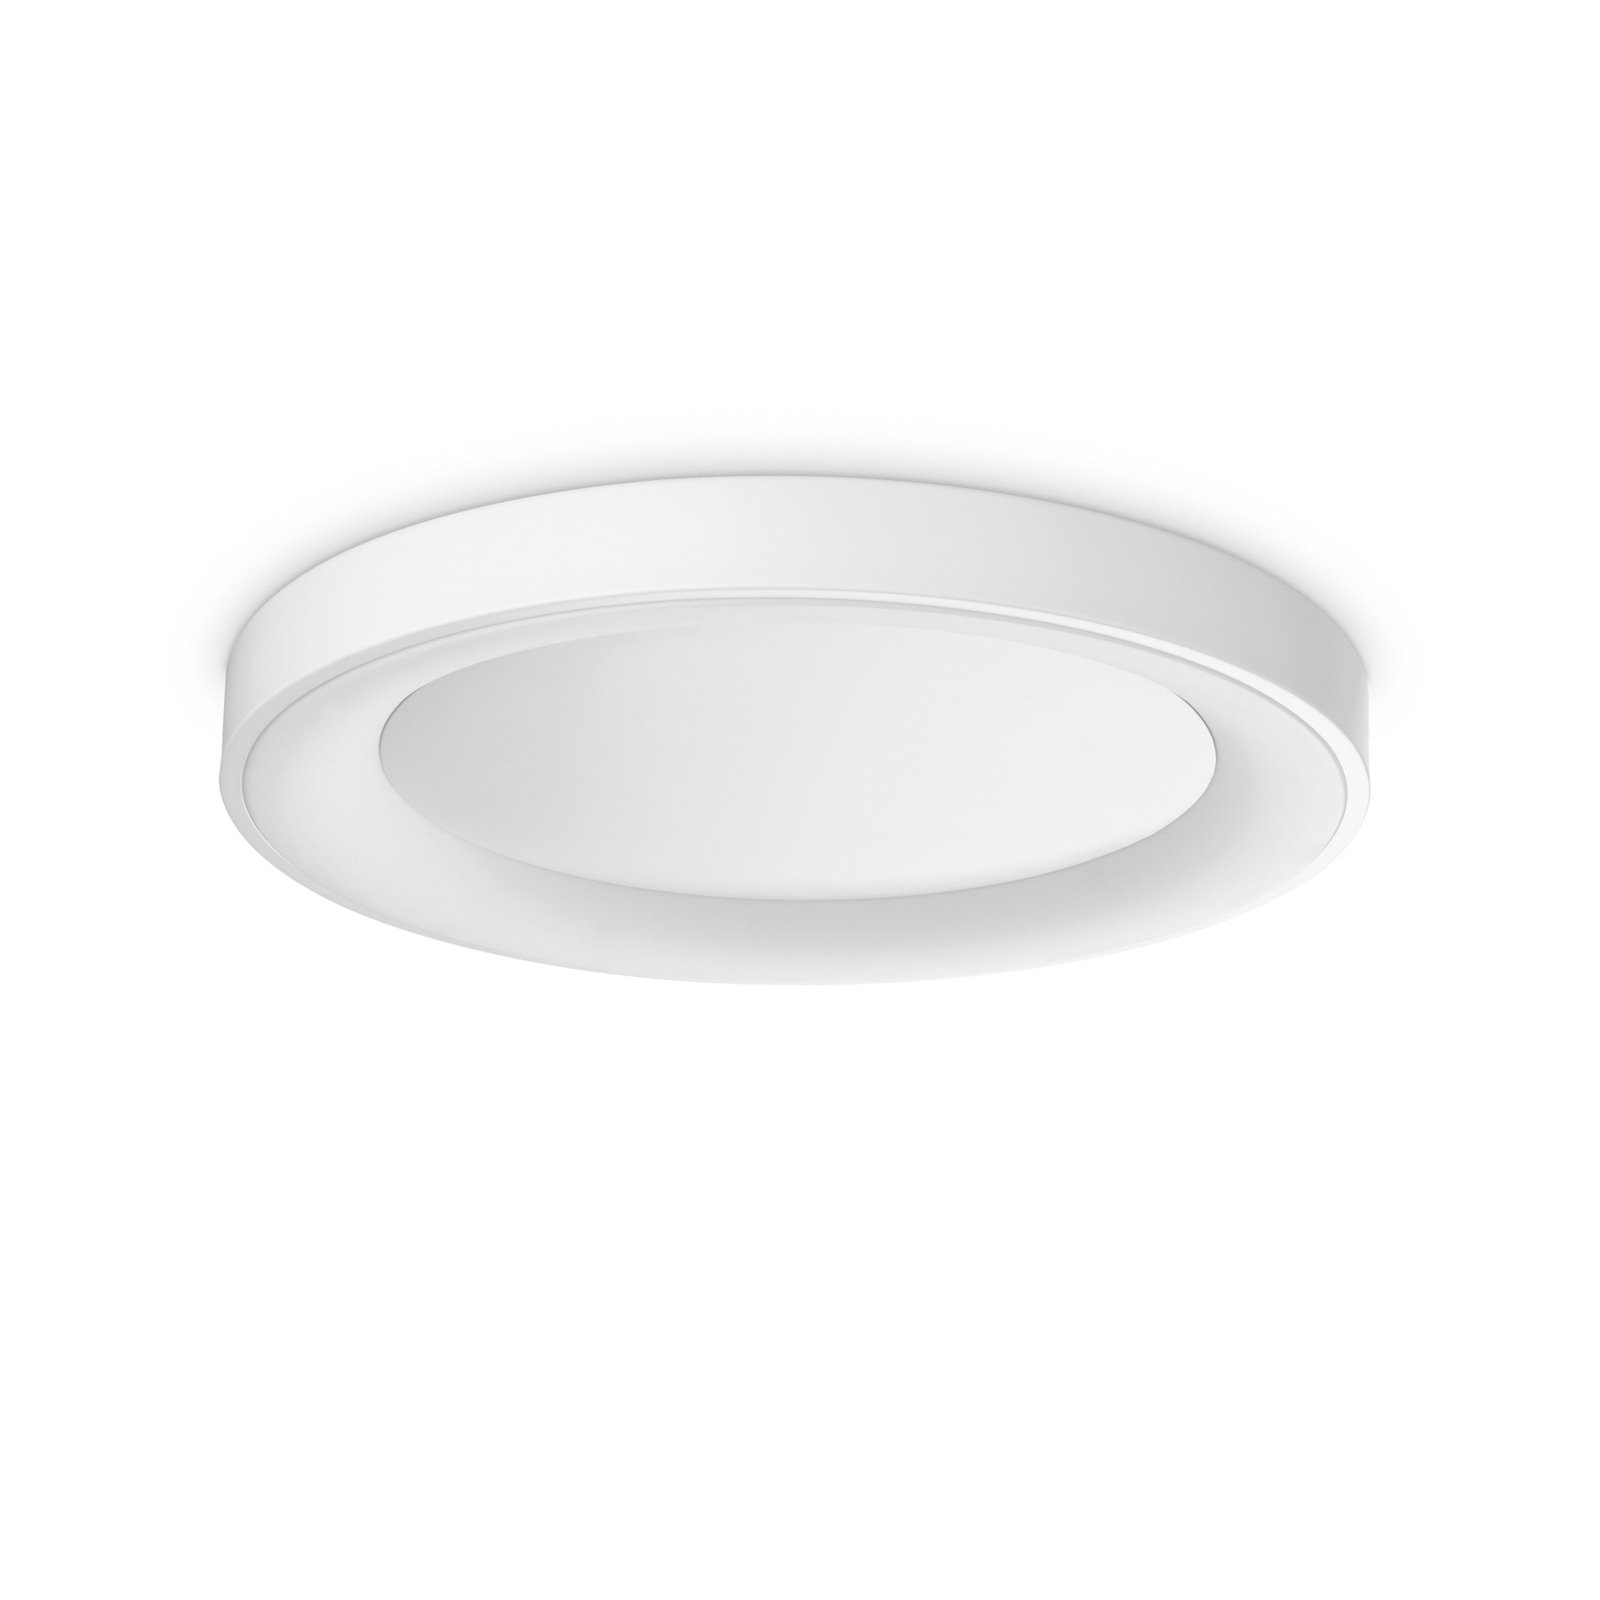 Ideal Lux LED stropné svietidlo Planet, biele, Ø 50 cm, kov